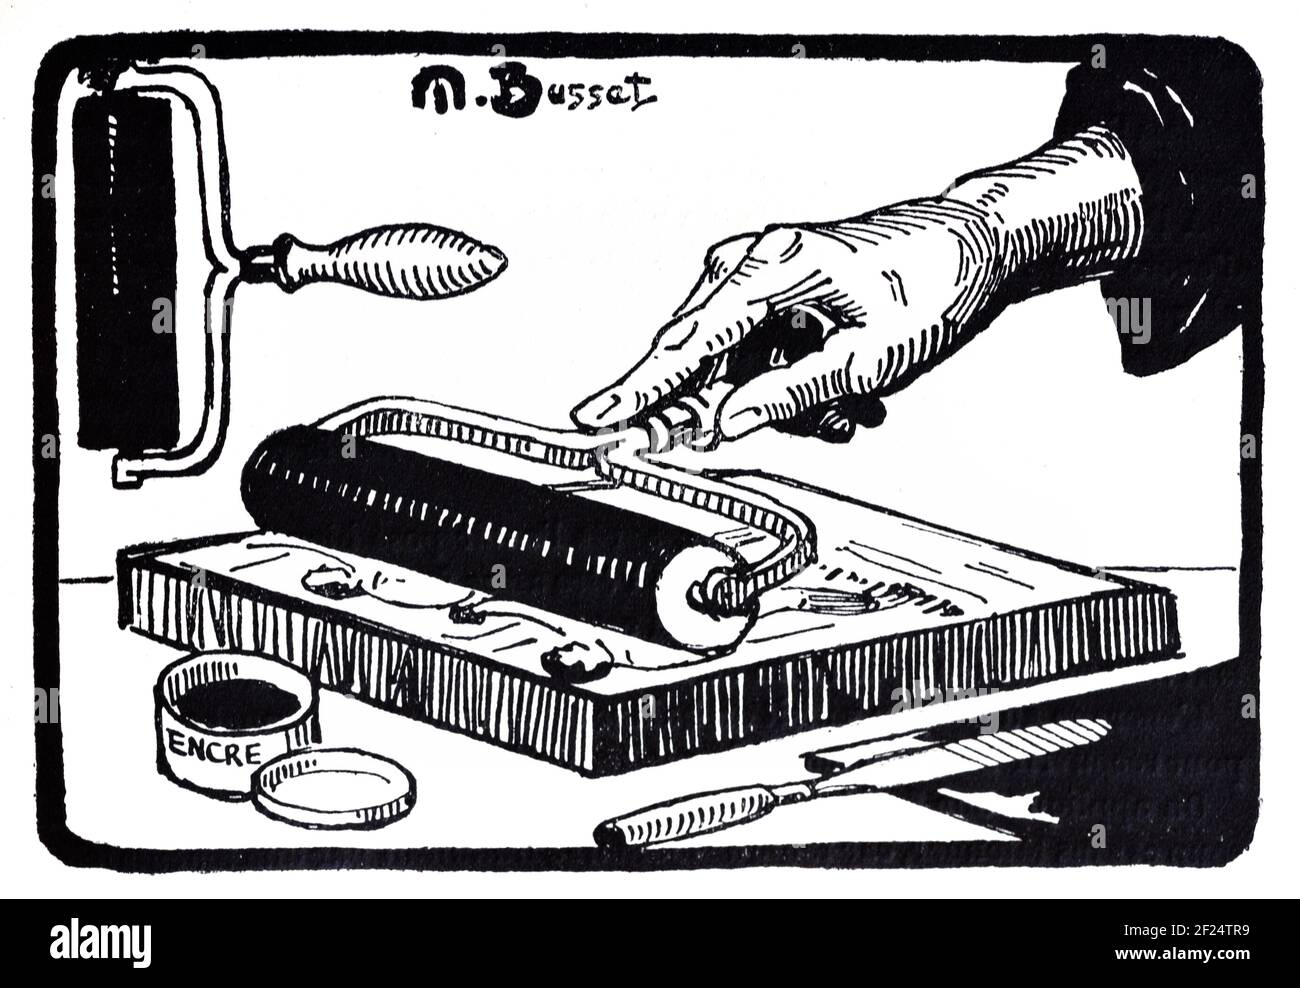 Wood Engraver or Printmaker Preparing Ink Roller for Relief Printing, Wood Engraving or Woodblock Printing. Vintage Woodcut by Maurice Busset c1920 Stock Photo